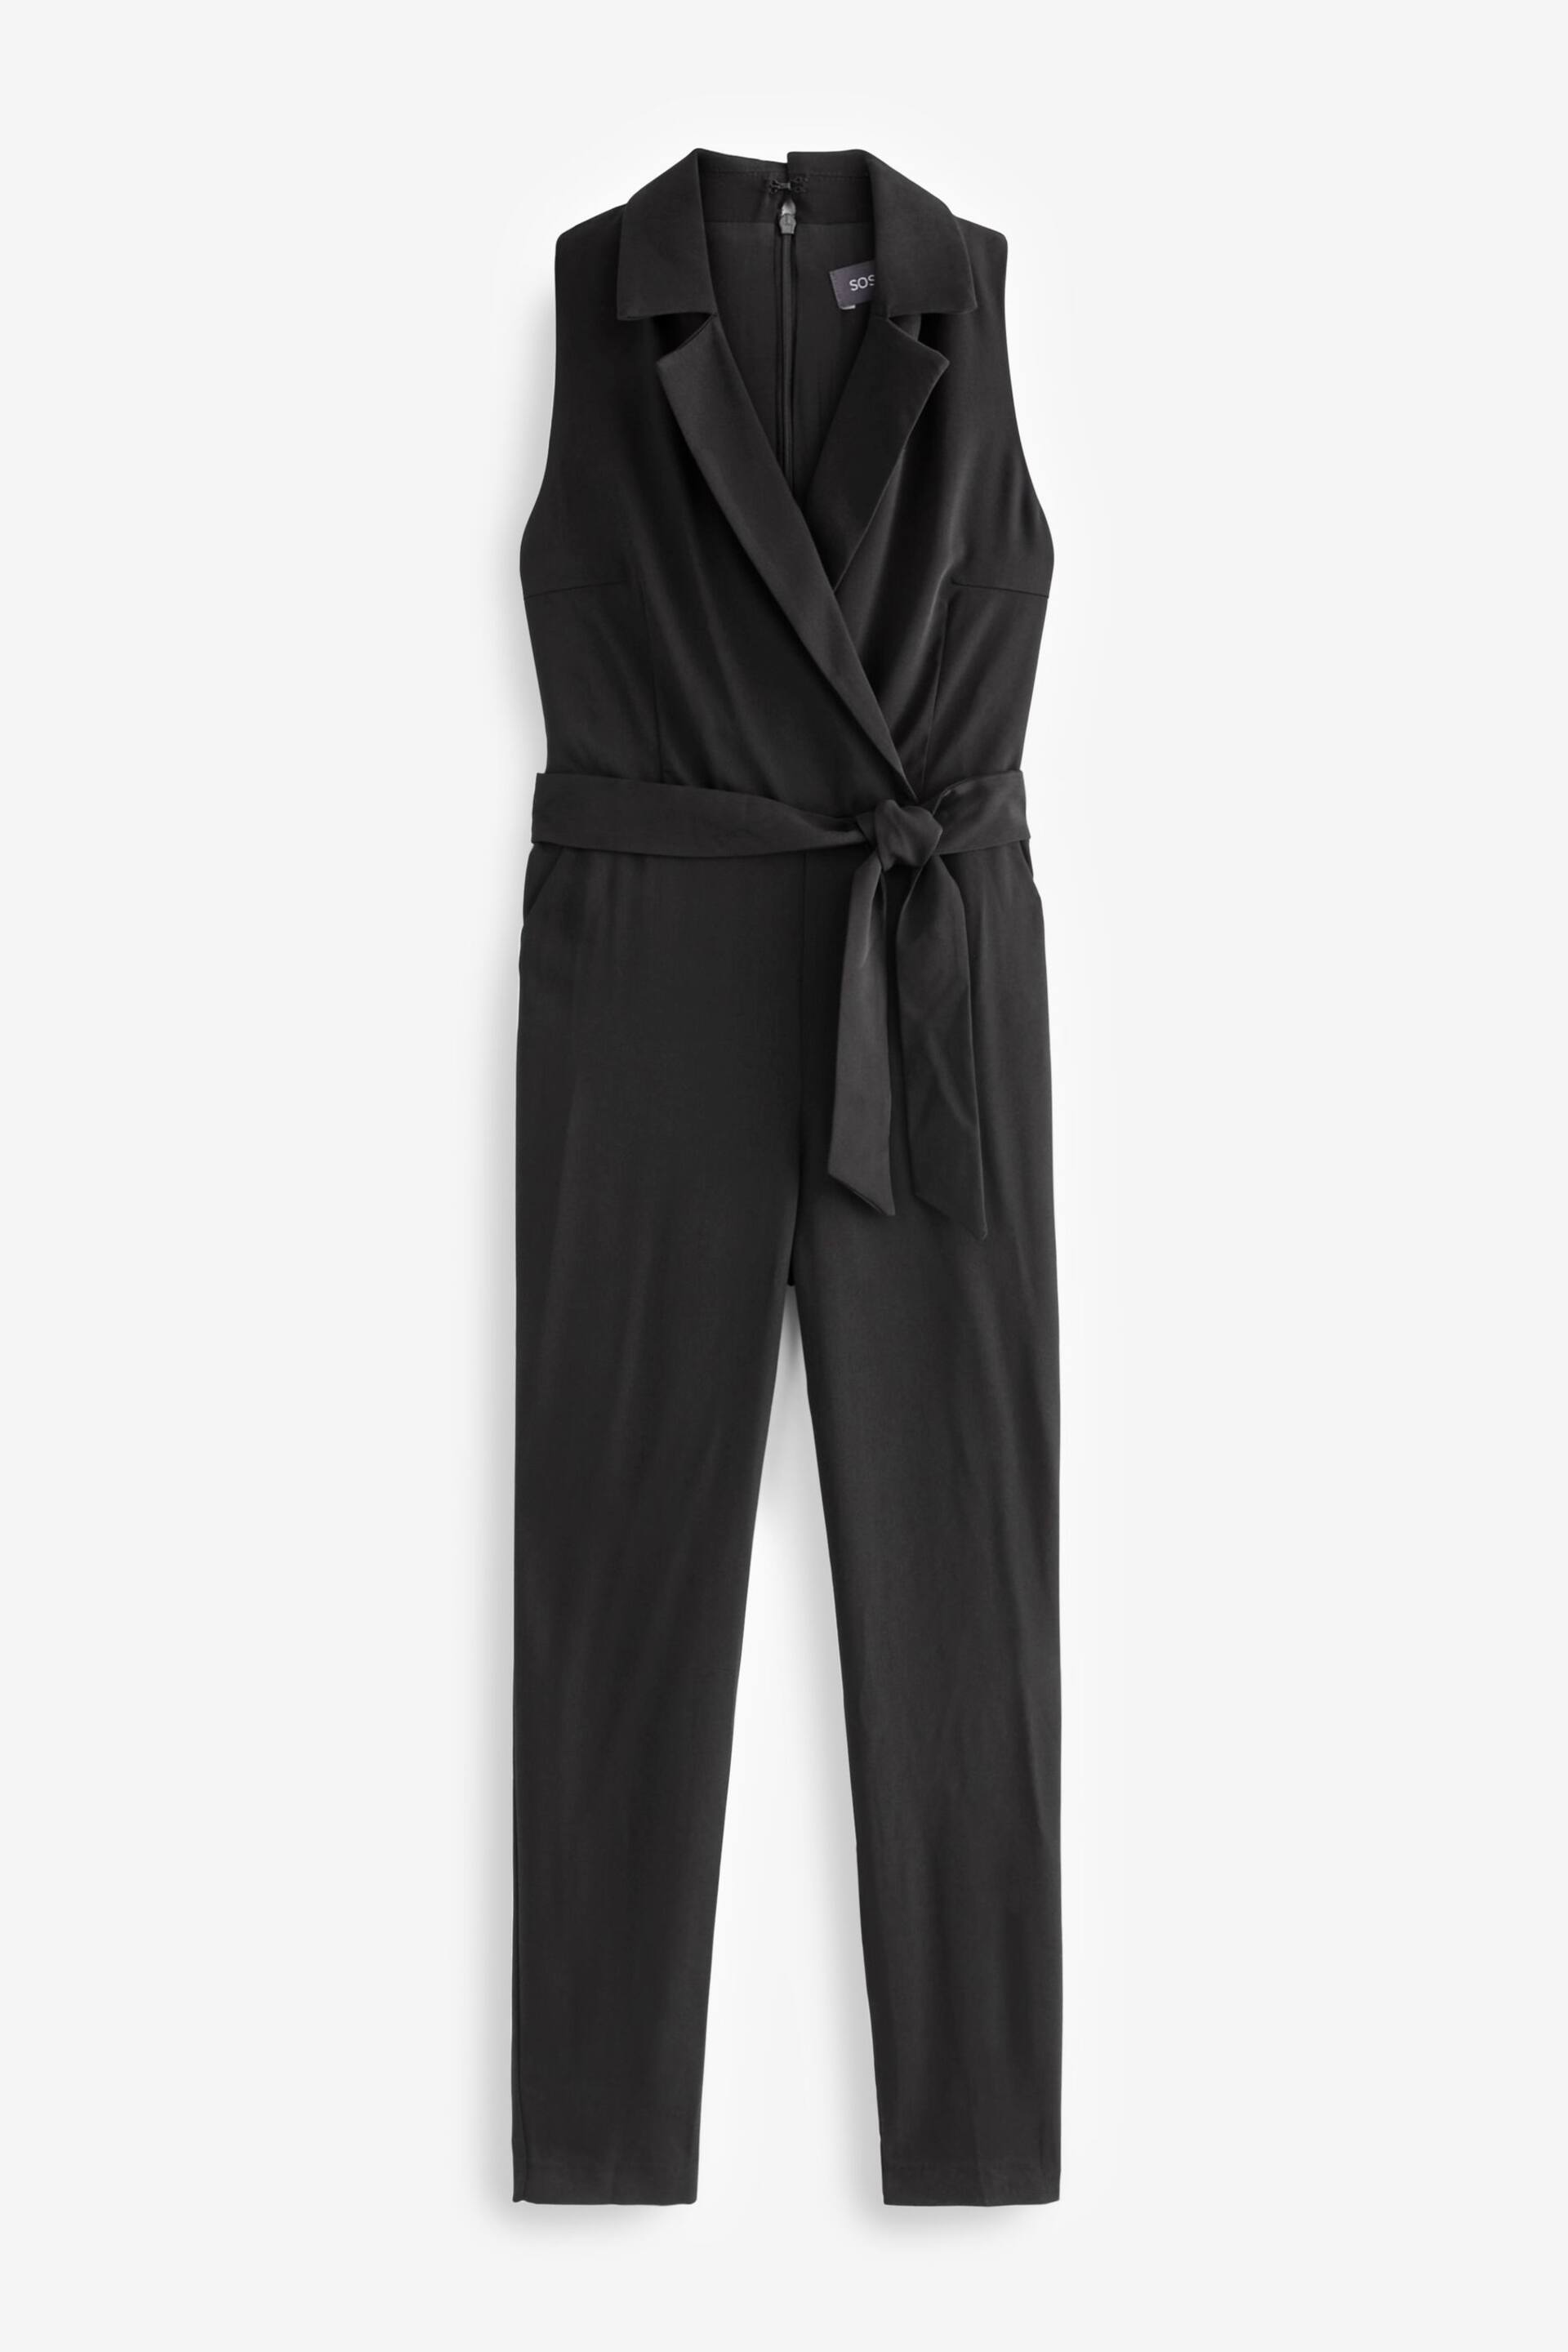 Sosandar Black Tuxedo Wrap Tapered Jumpsuit - Image 5 of 5